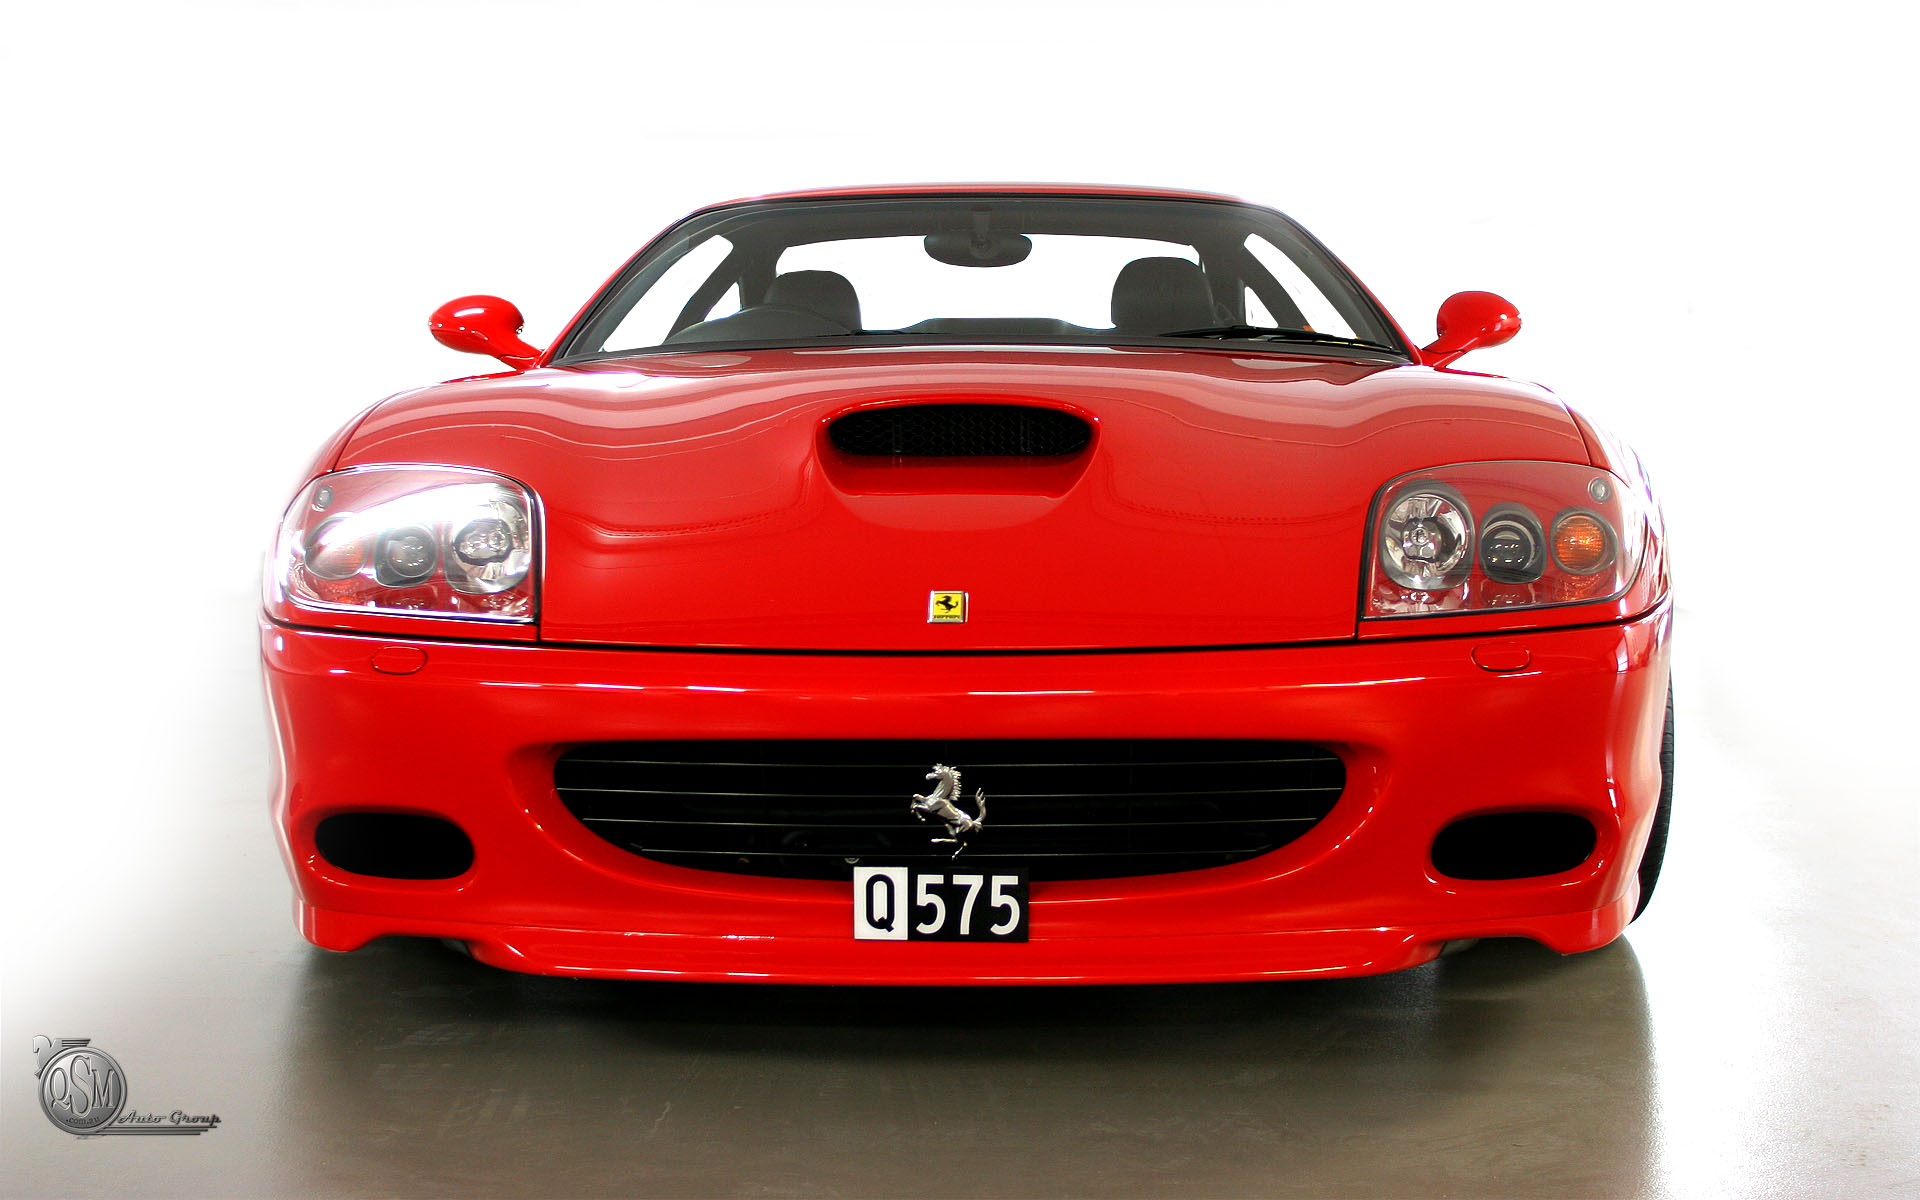 Q575 Ferrari number plate